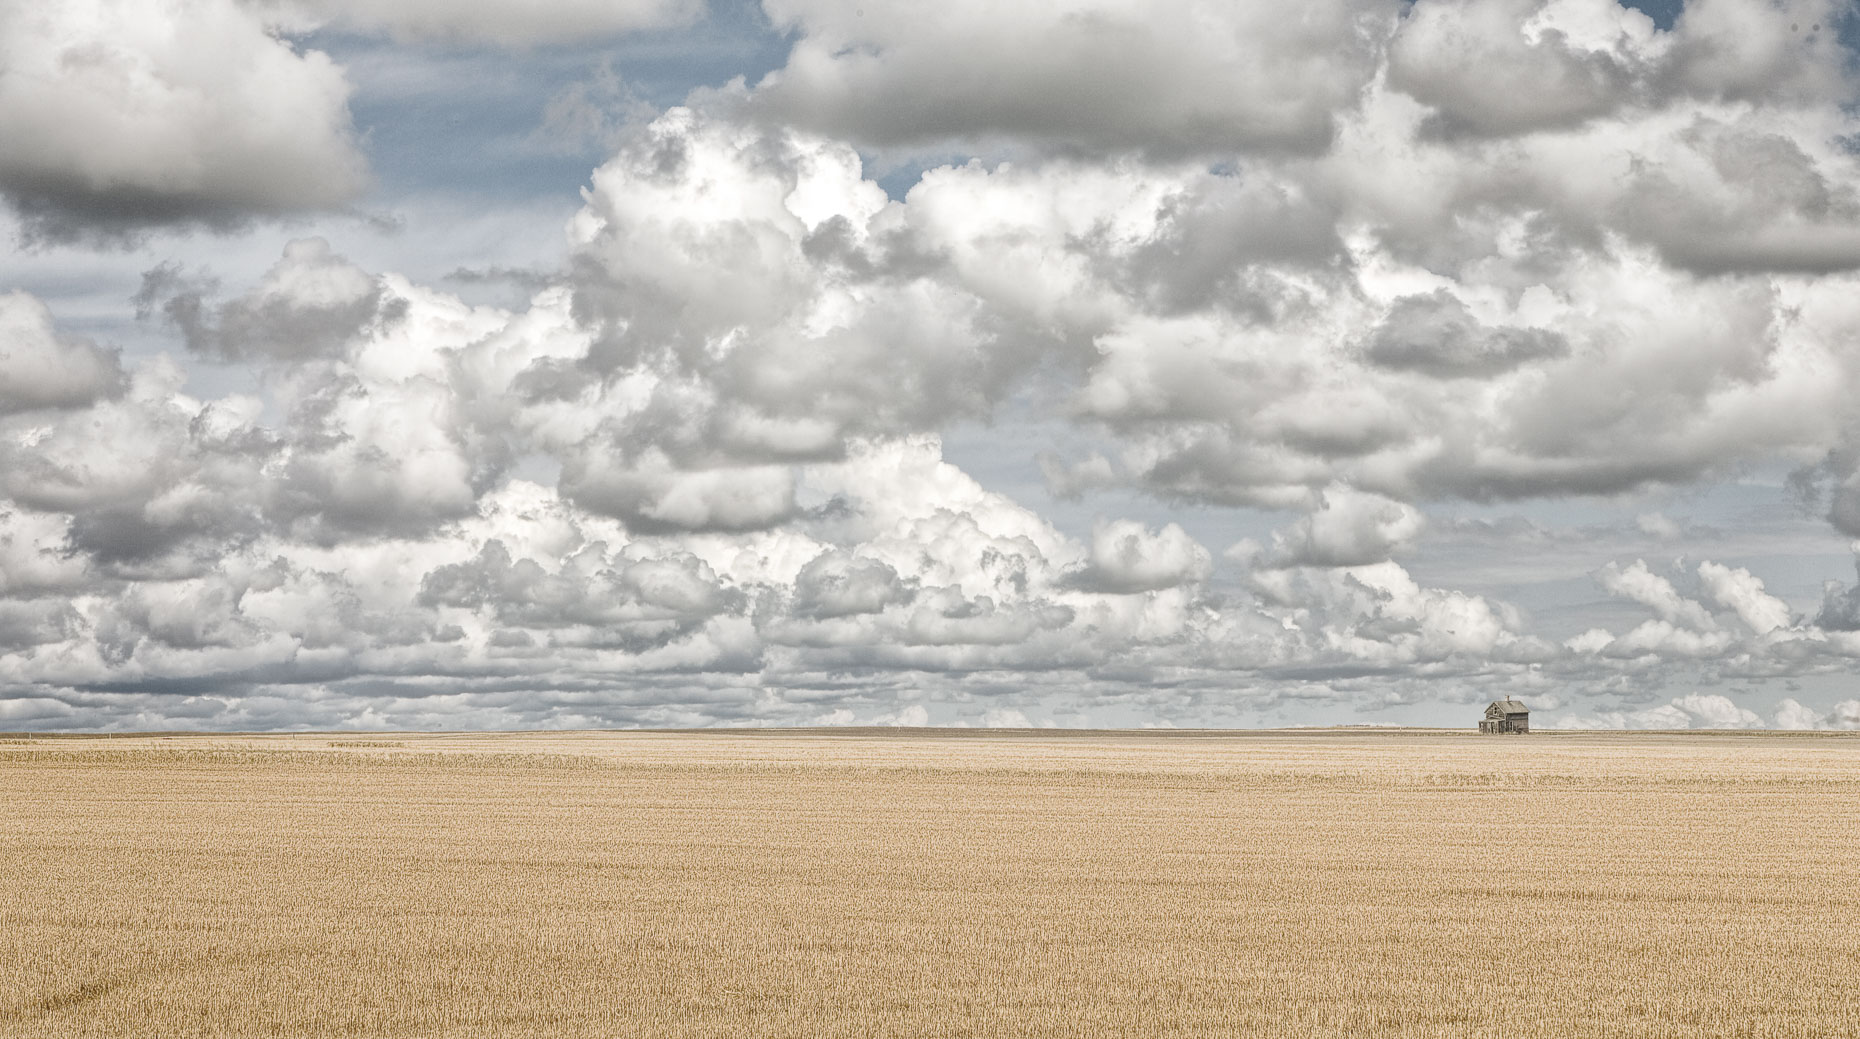 Farm house in wheat field with dramatic cloudy sky in Montana  by David Zaitz